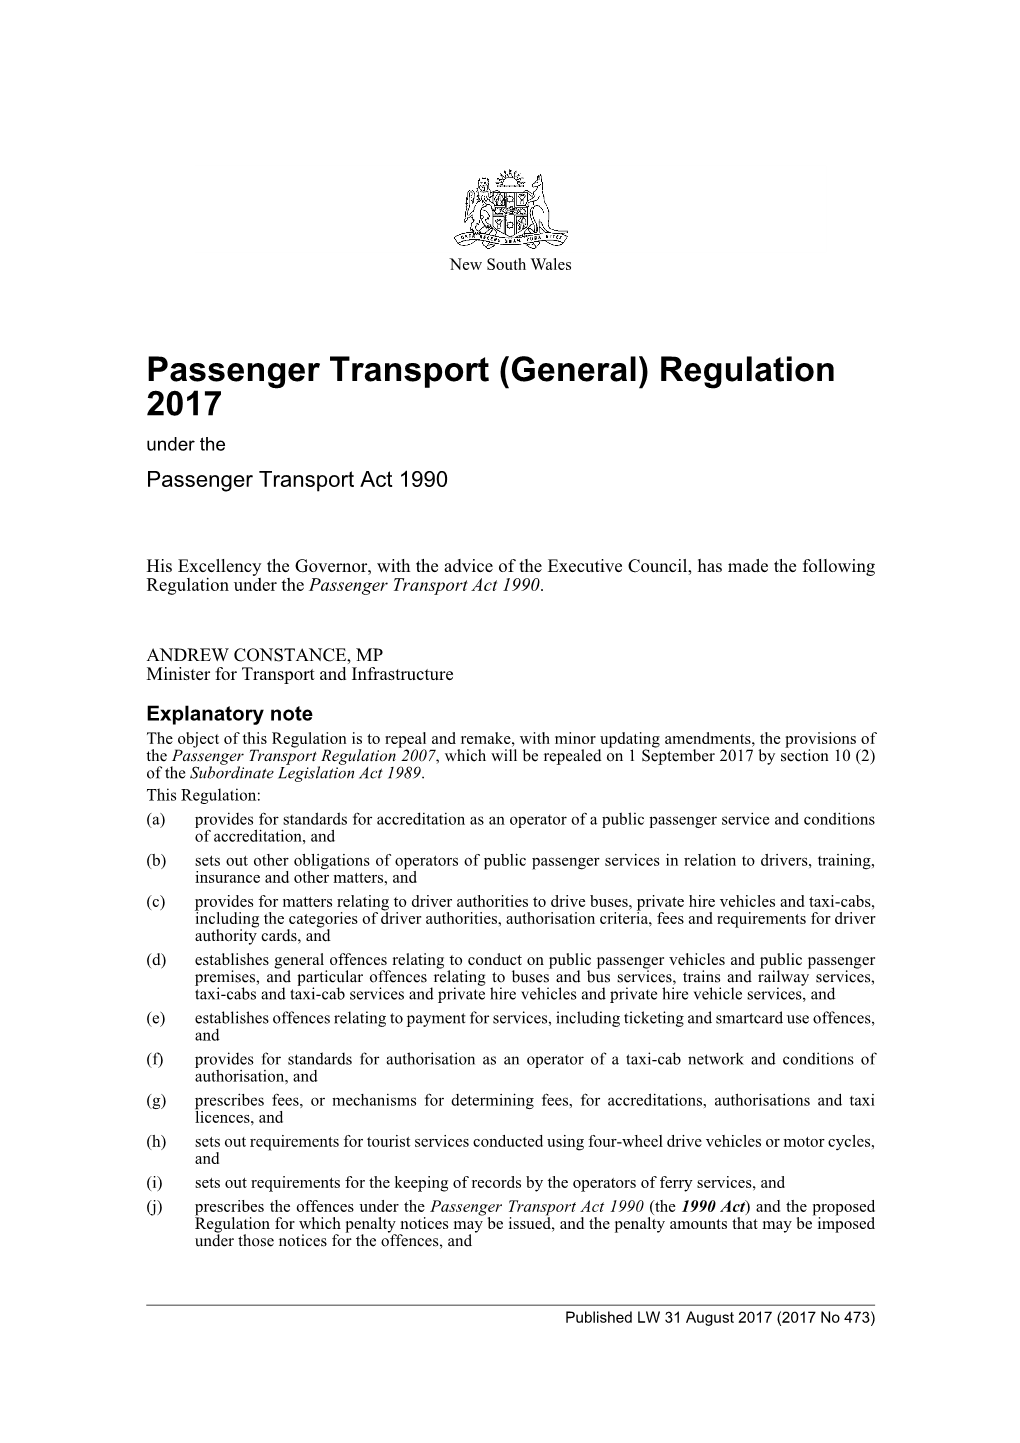 Passenger Transport (General) Regulation 2017 Under the Passenger Transport Act 1990